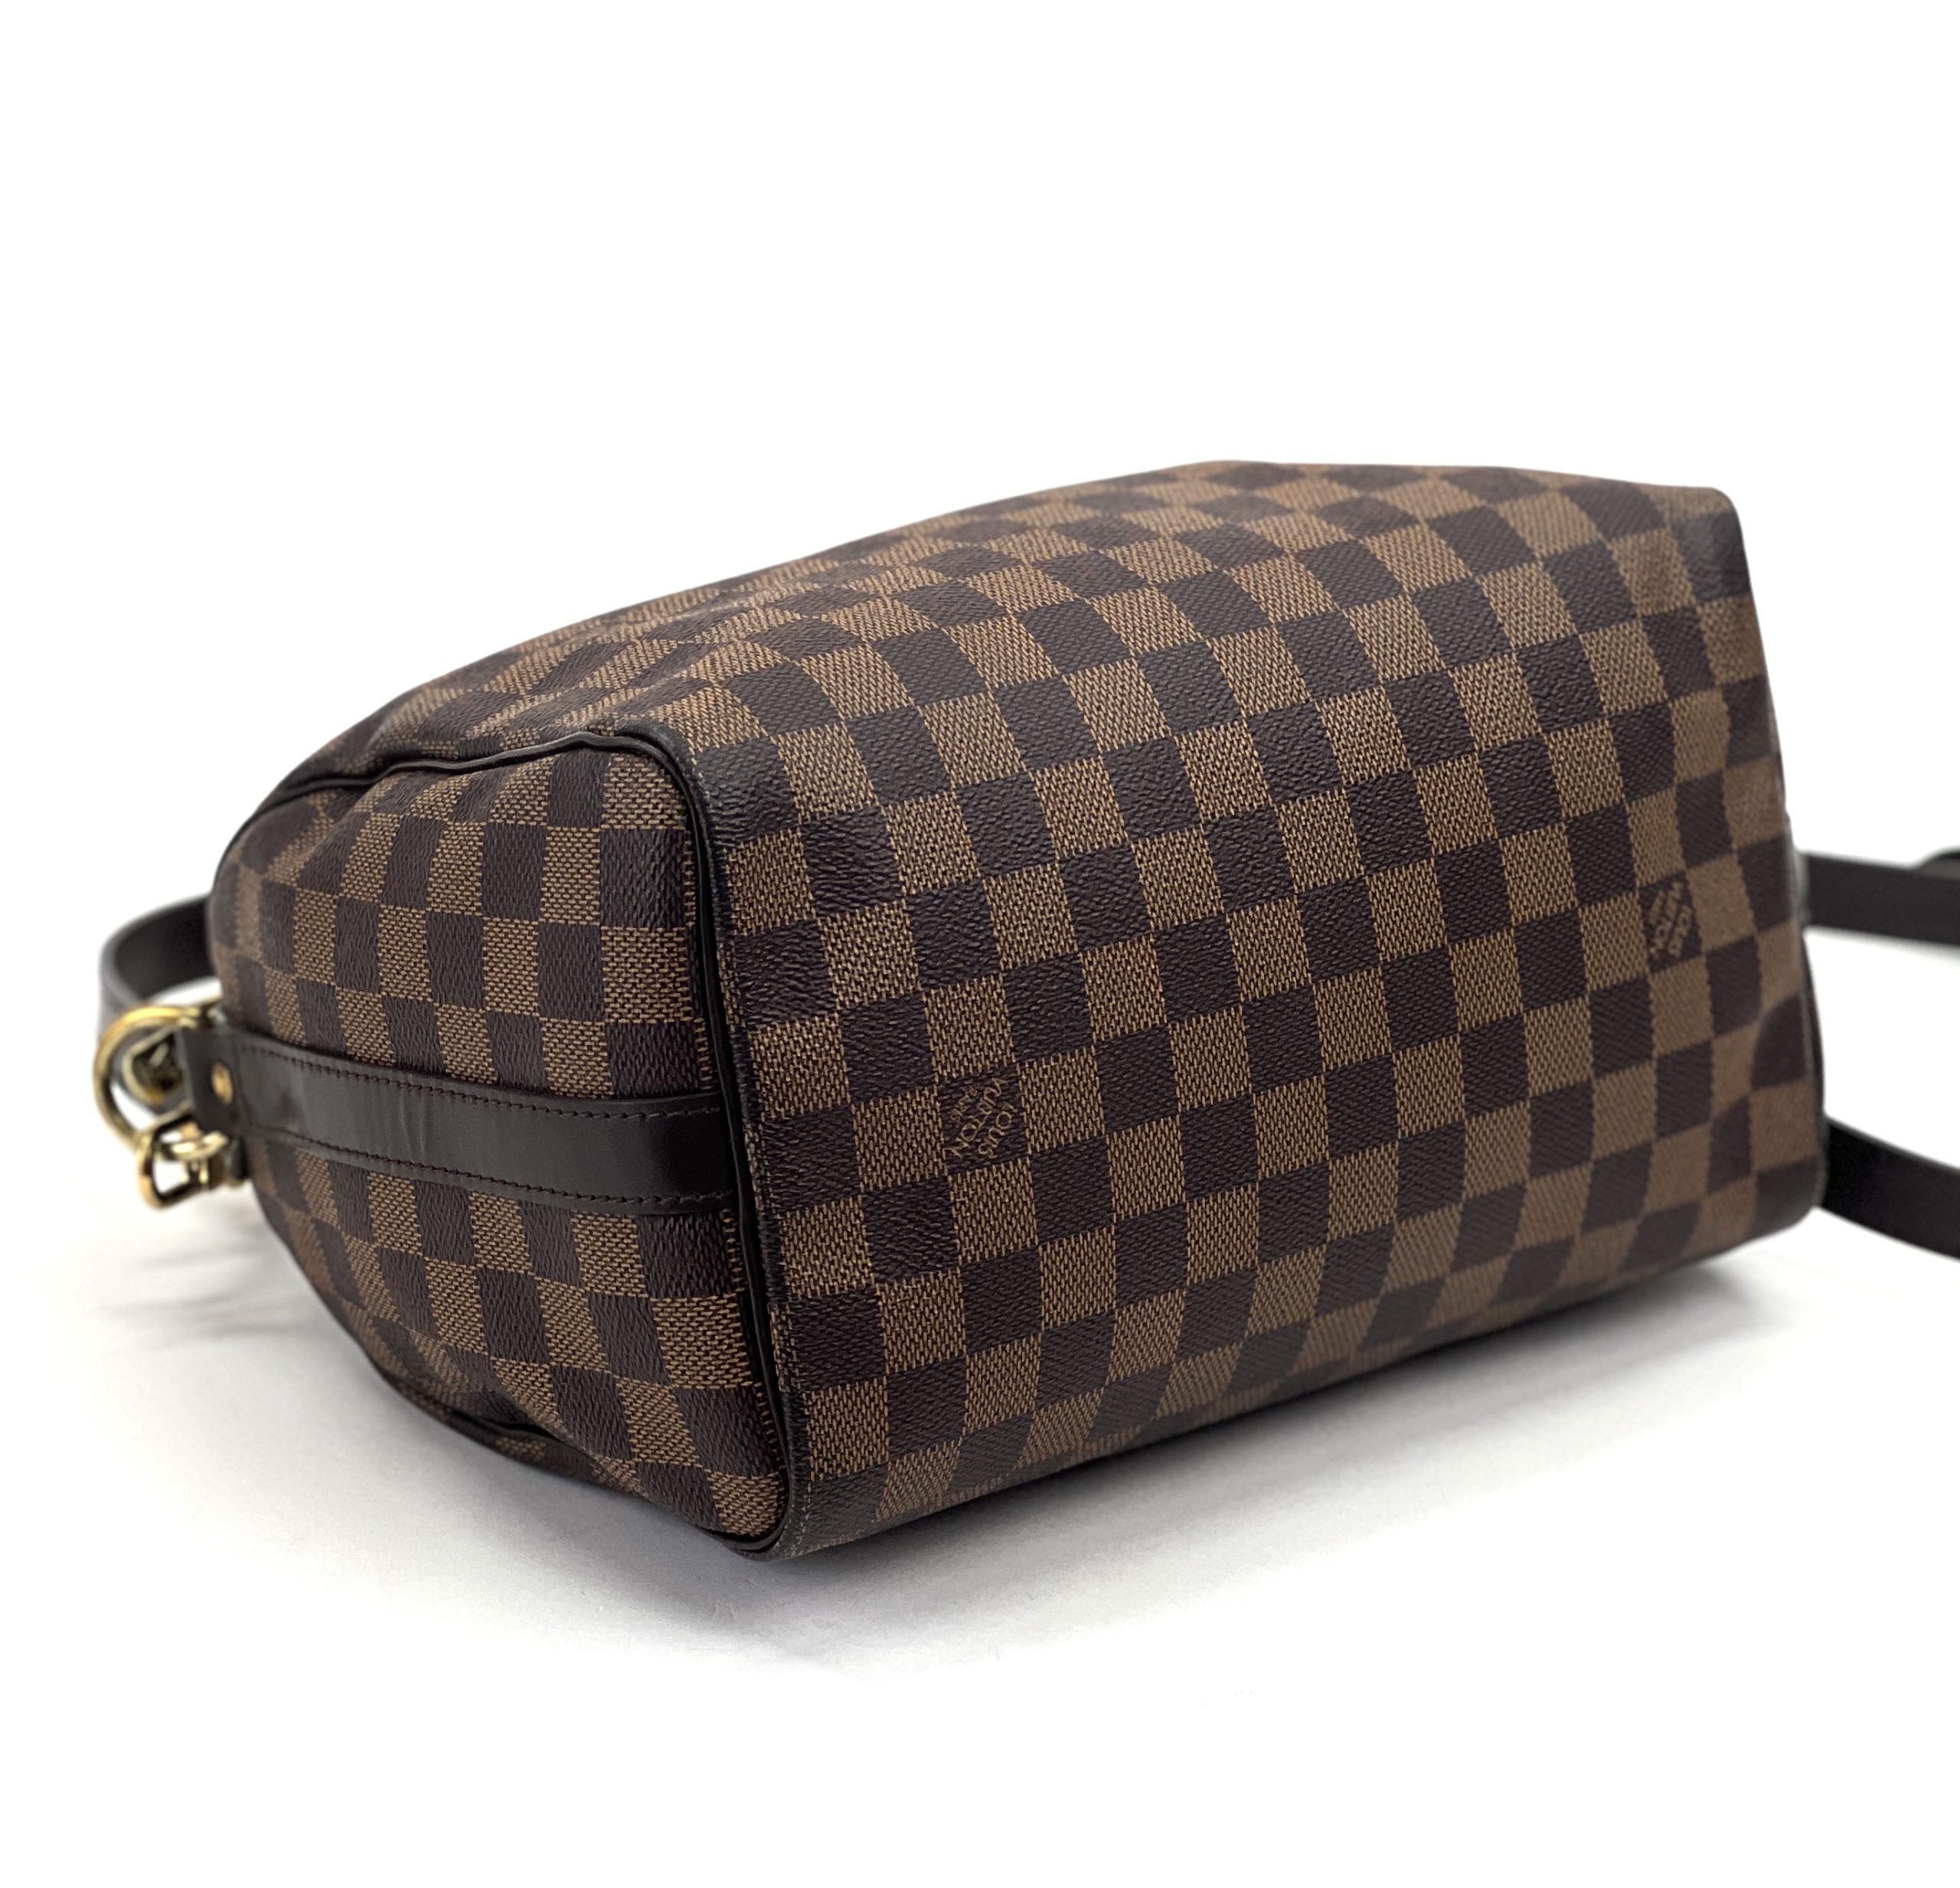 Buy Pre-owned & Brand new Luxury Louis Vuitton Damier Ebene Speedy 25 Bag  Online